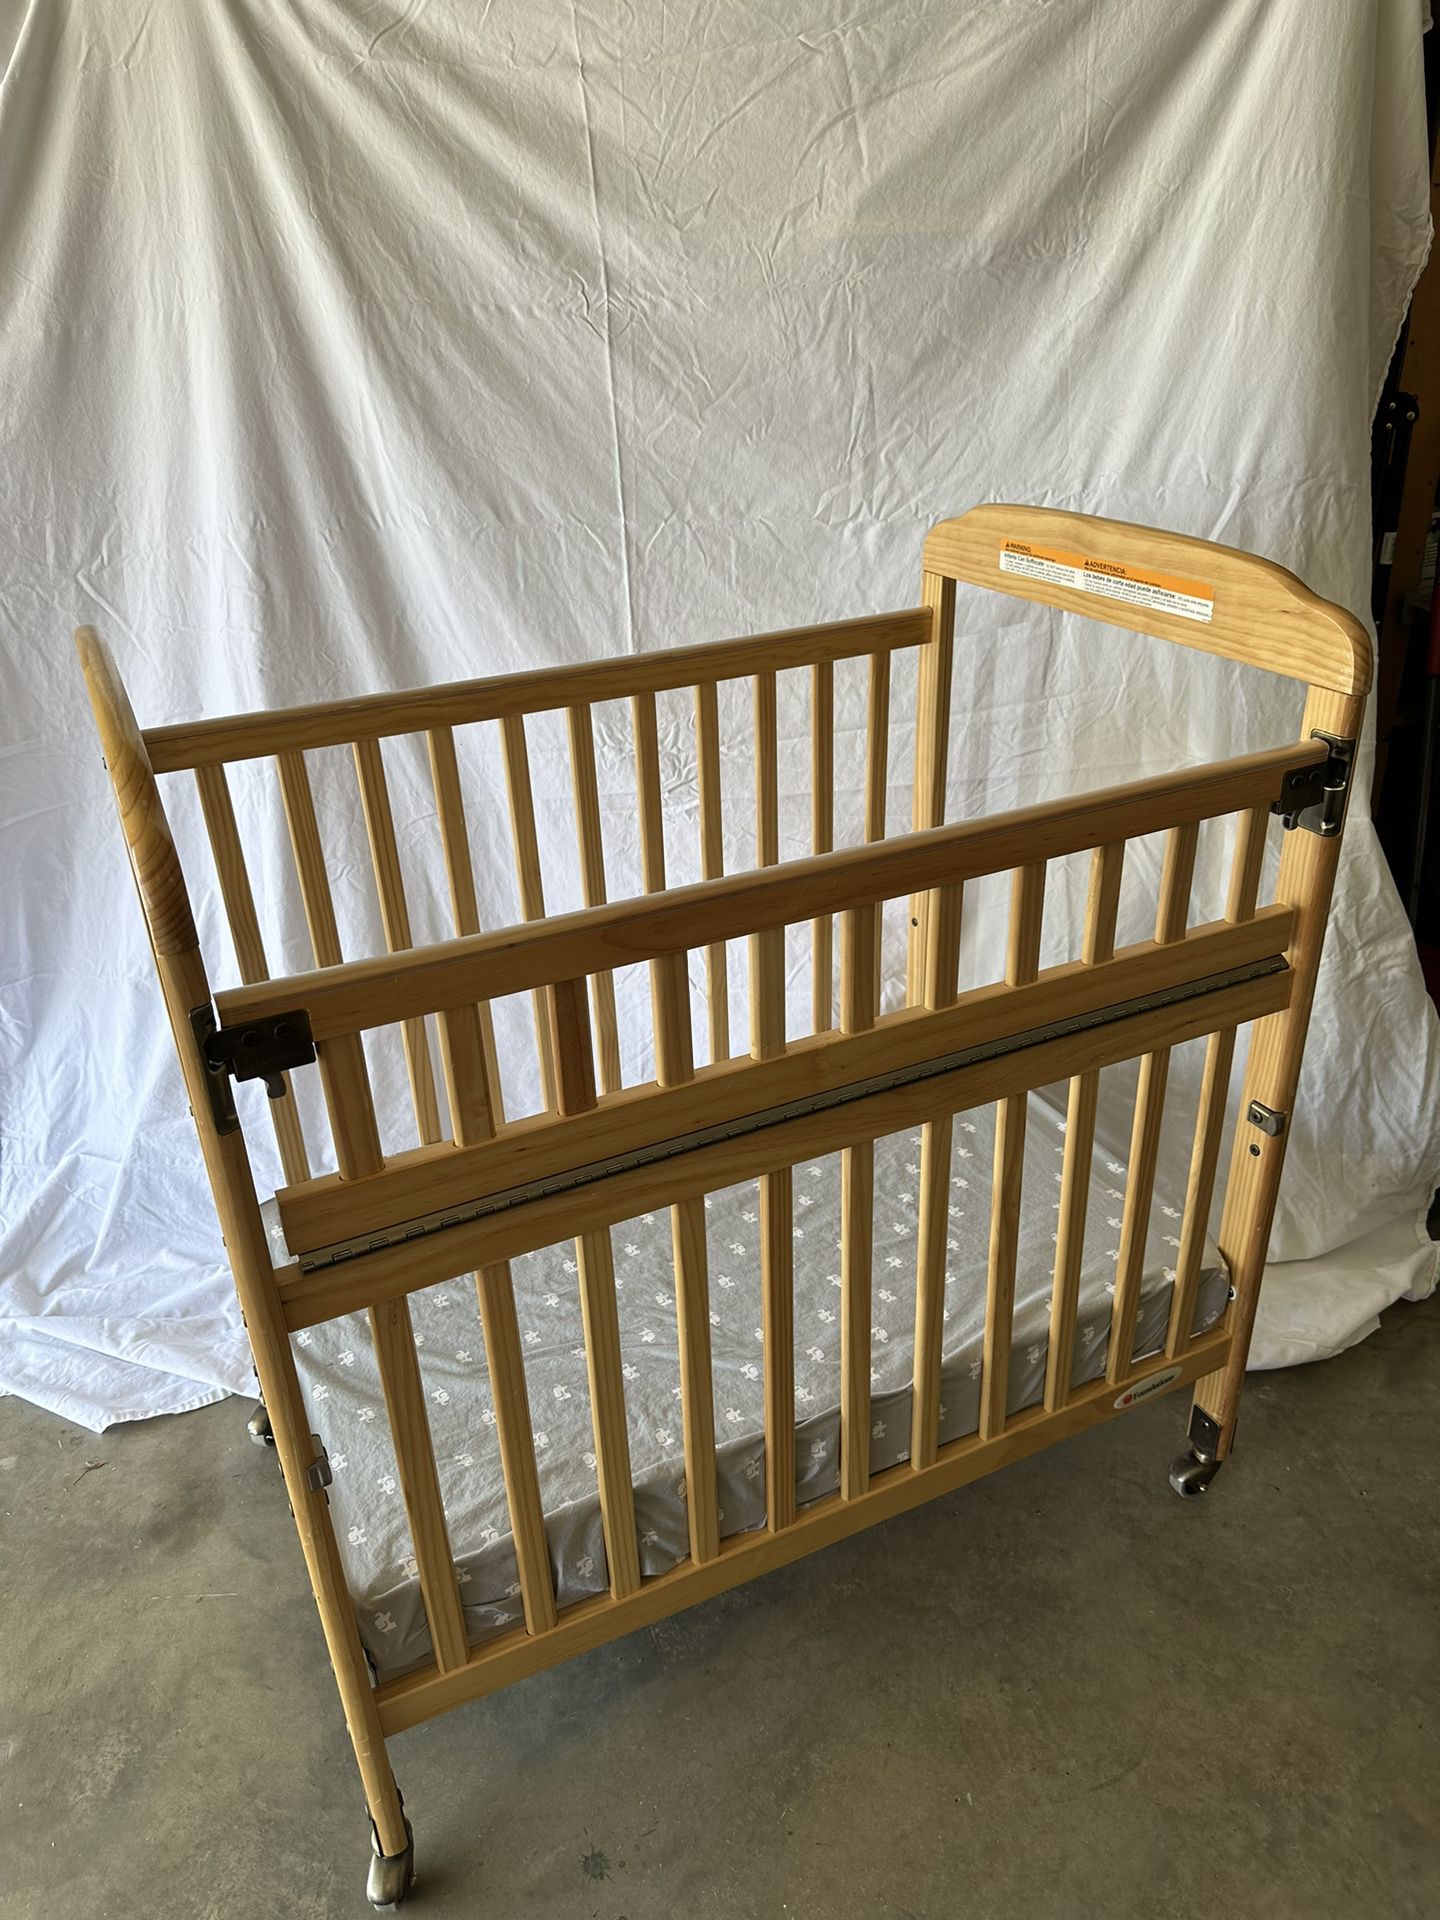 Compact Wooden Crib And Mattress